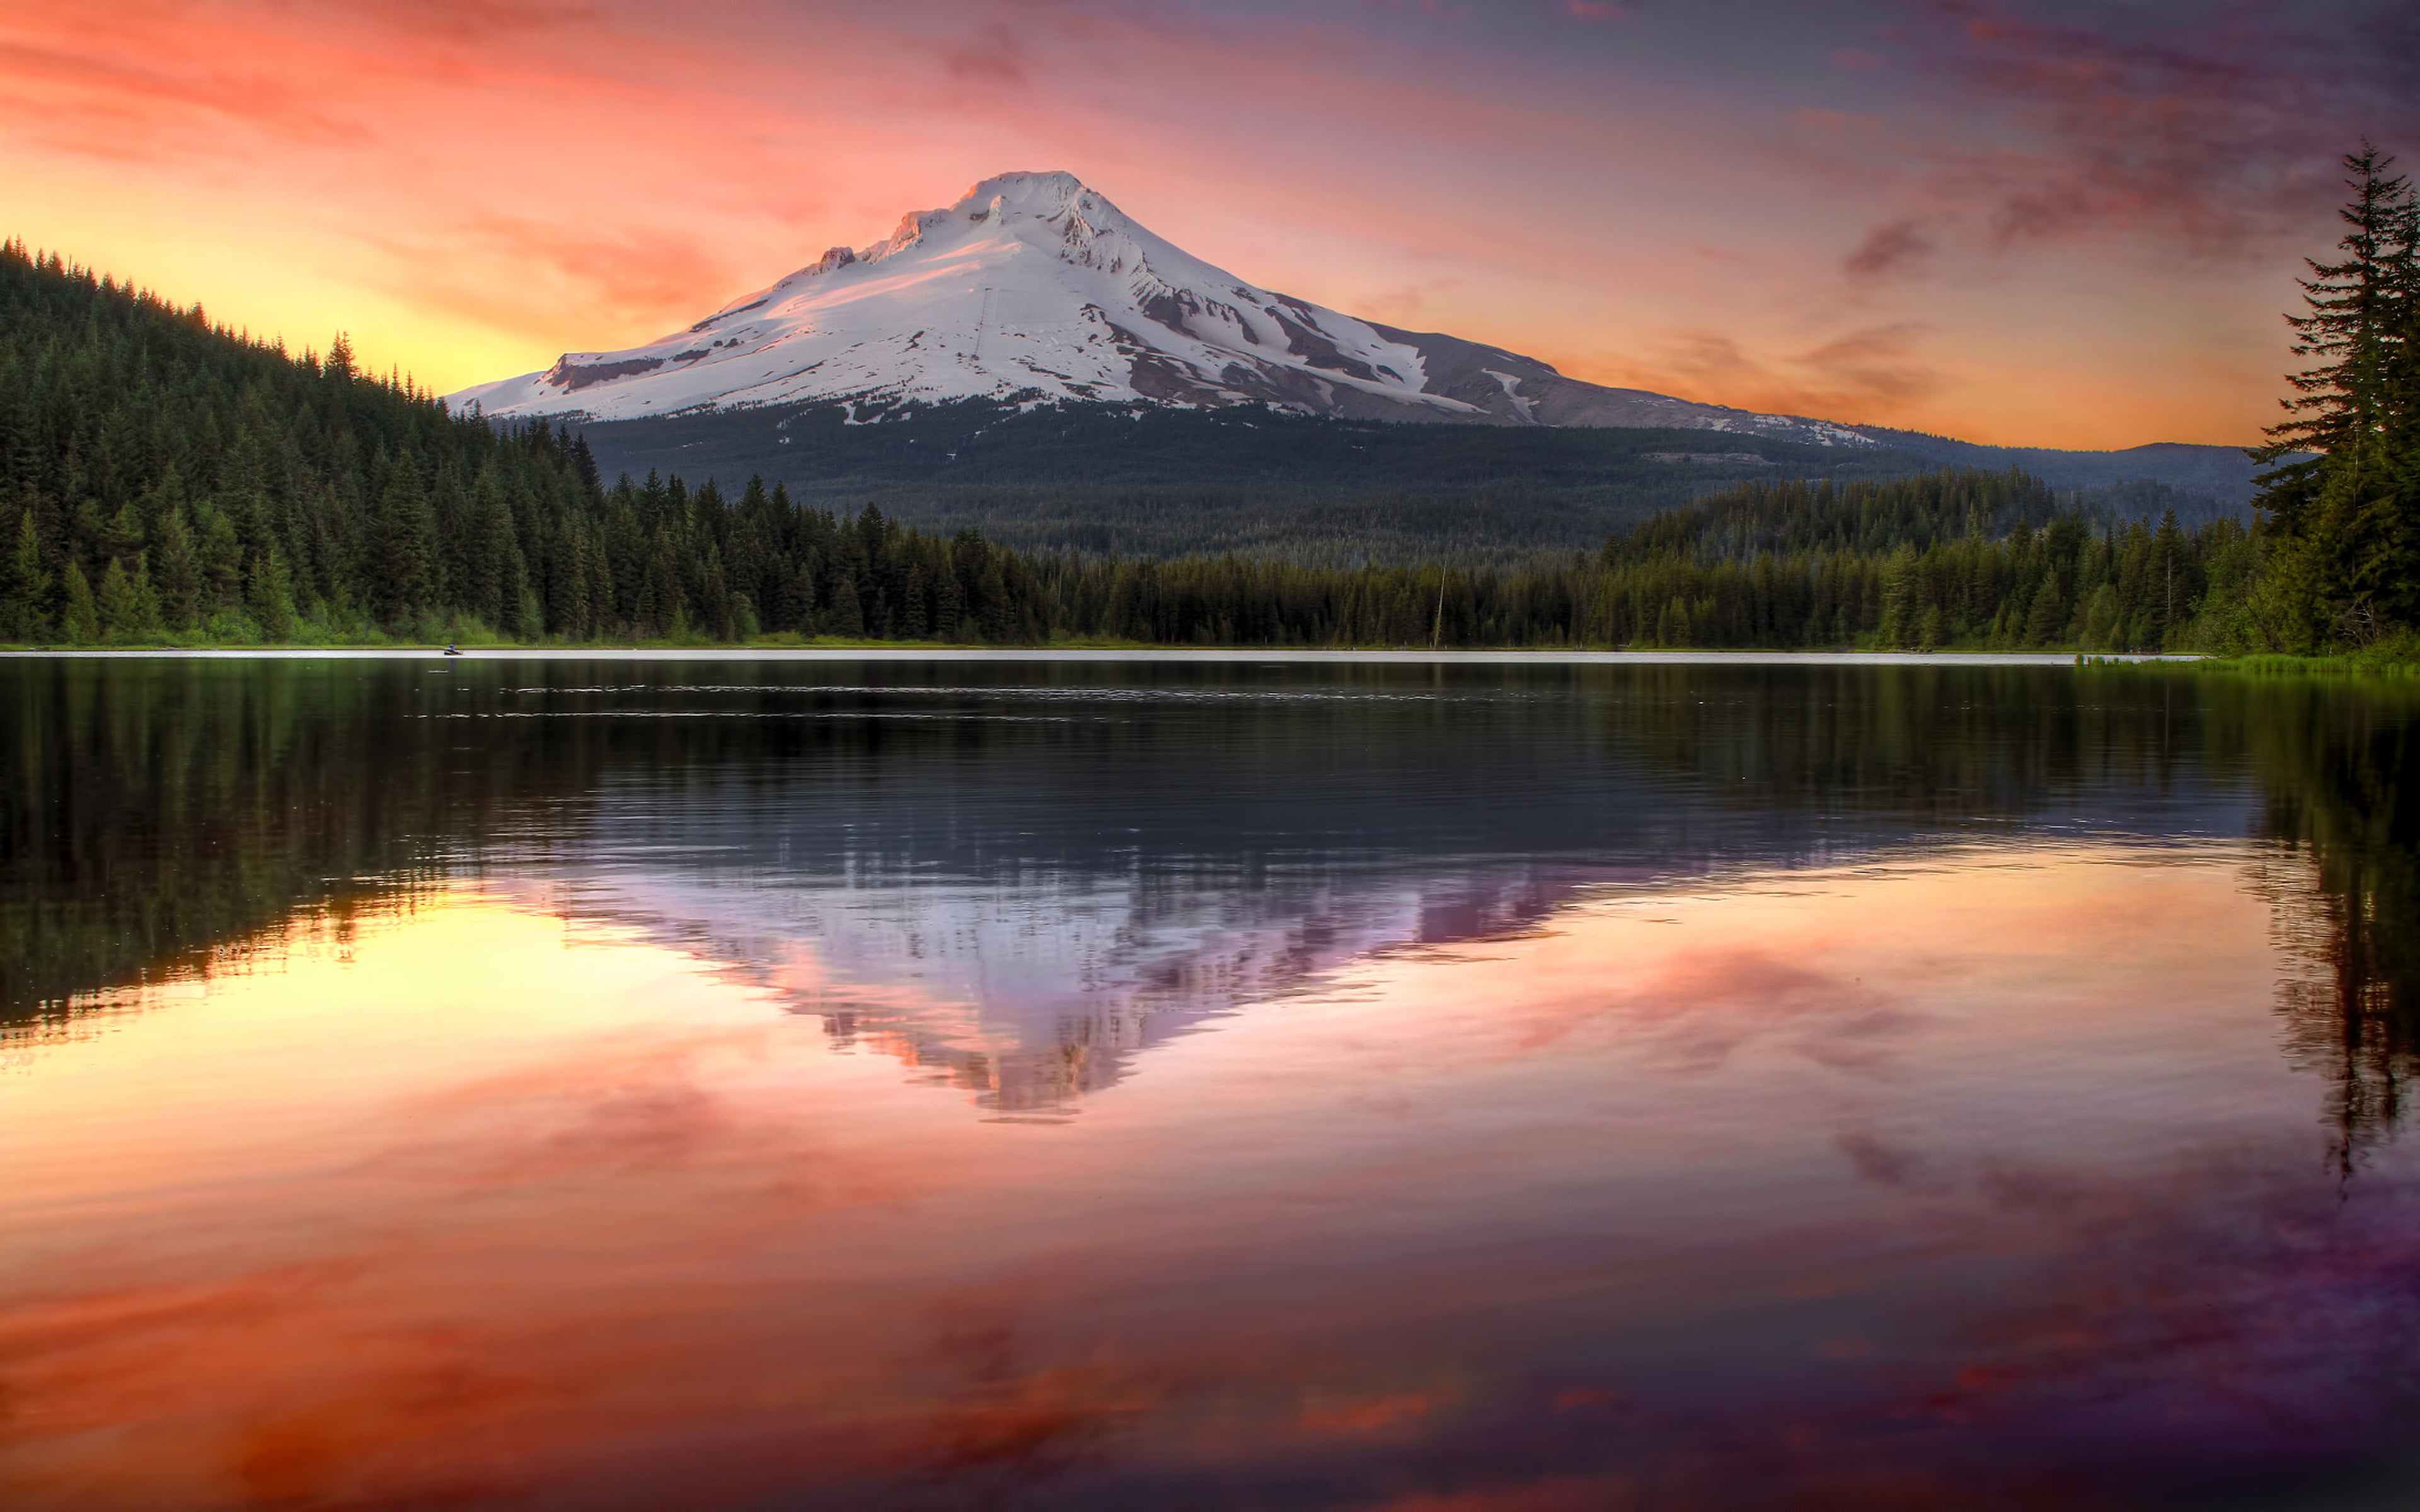 Sunset Trillium Lake Reflection Of Mount Hood Stratovolcano In Oregon Ultra Hd Tv Wallpaper For Desktop Laptop Tablet And Mobile Phones 3840×2400